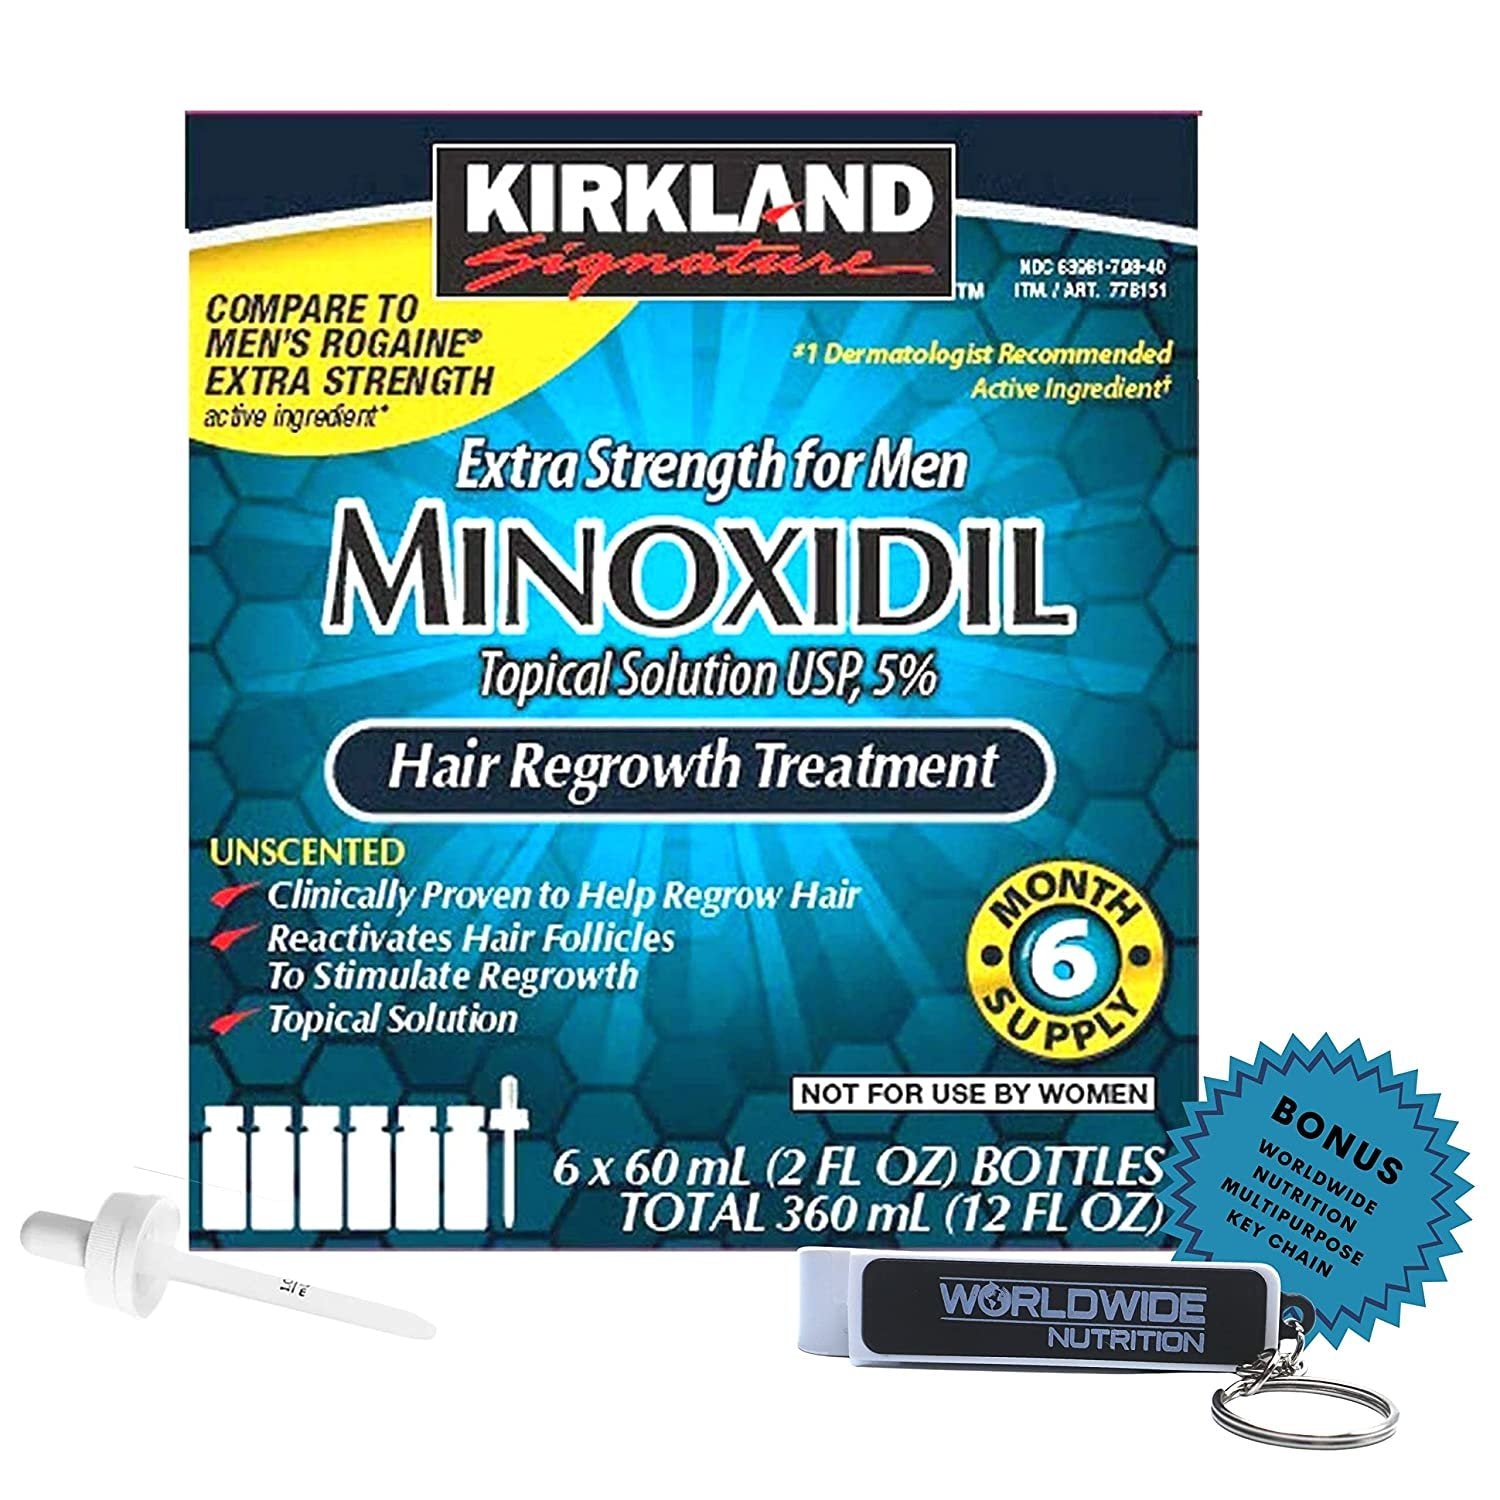 Kirkland Minoxidil 5% Extra Strength - Hair Regrowth Treatment for Men - 2 Fl Oz (Pack of 6) - with Worldwide Nutrition Bonus Key Chain